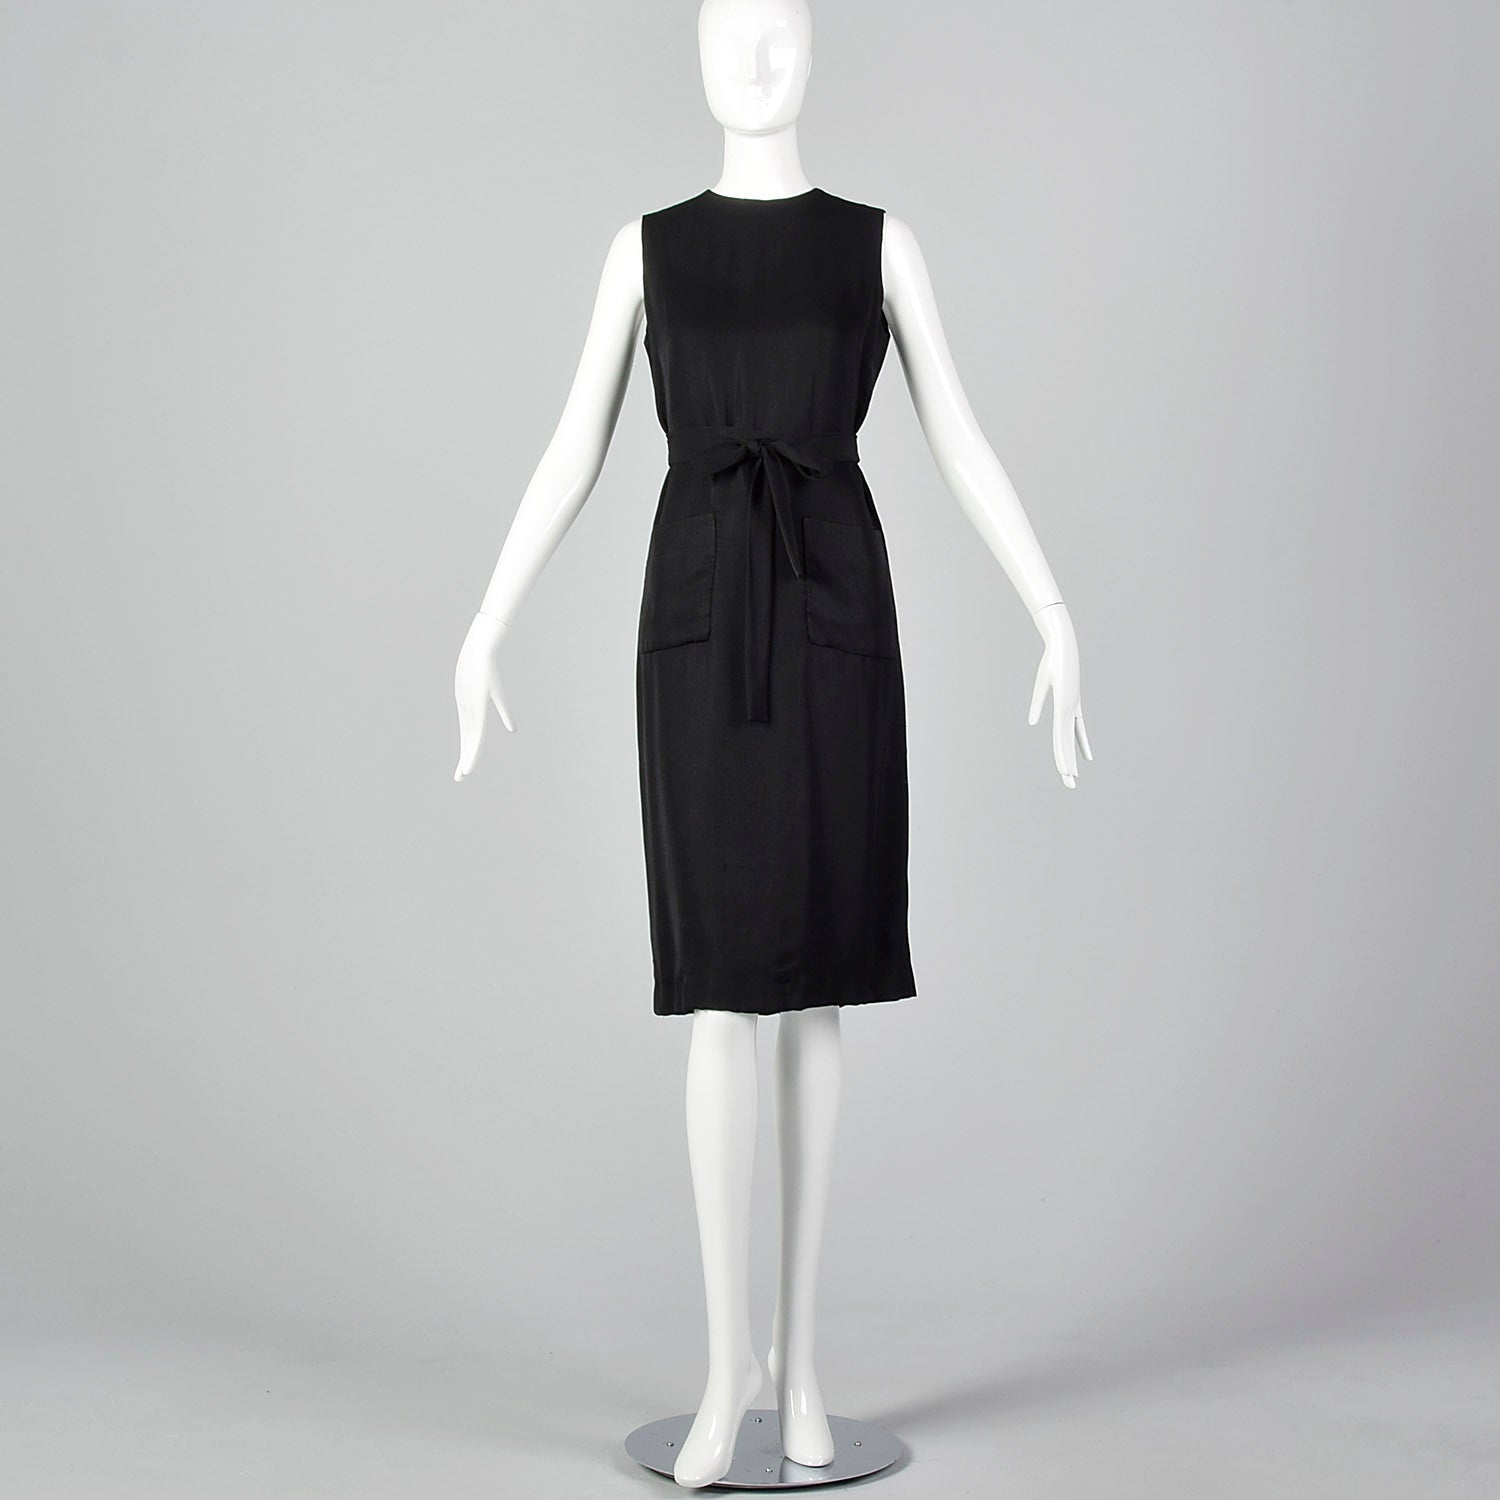 Small 1960s Sleeveless Black Dress